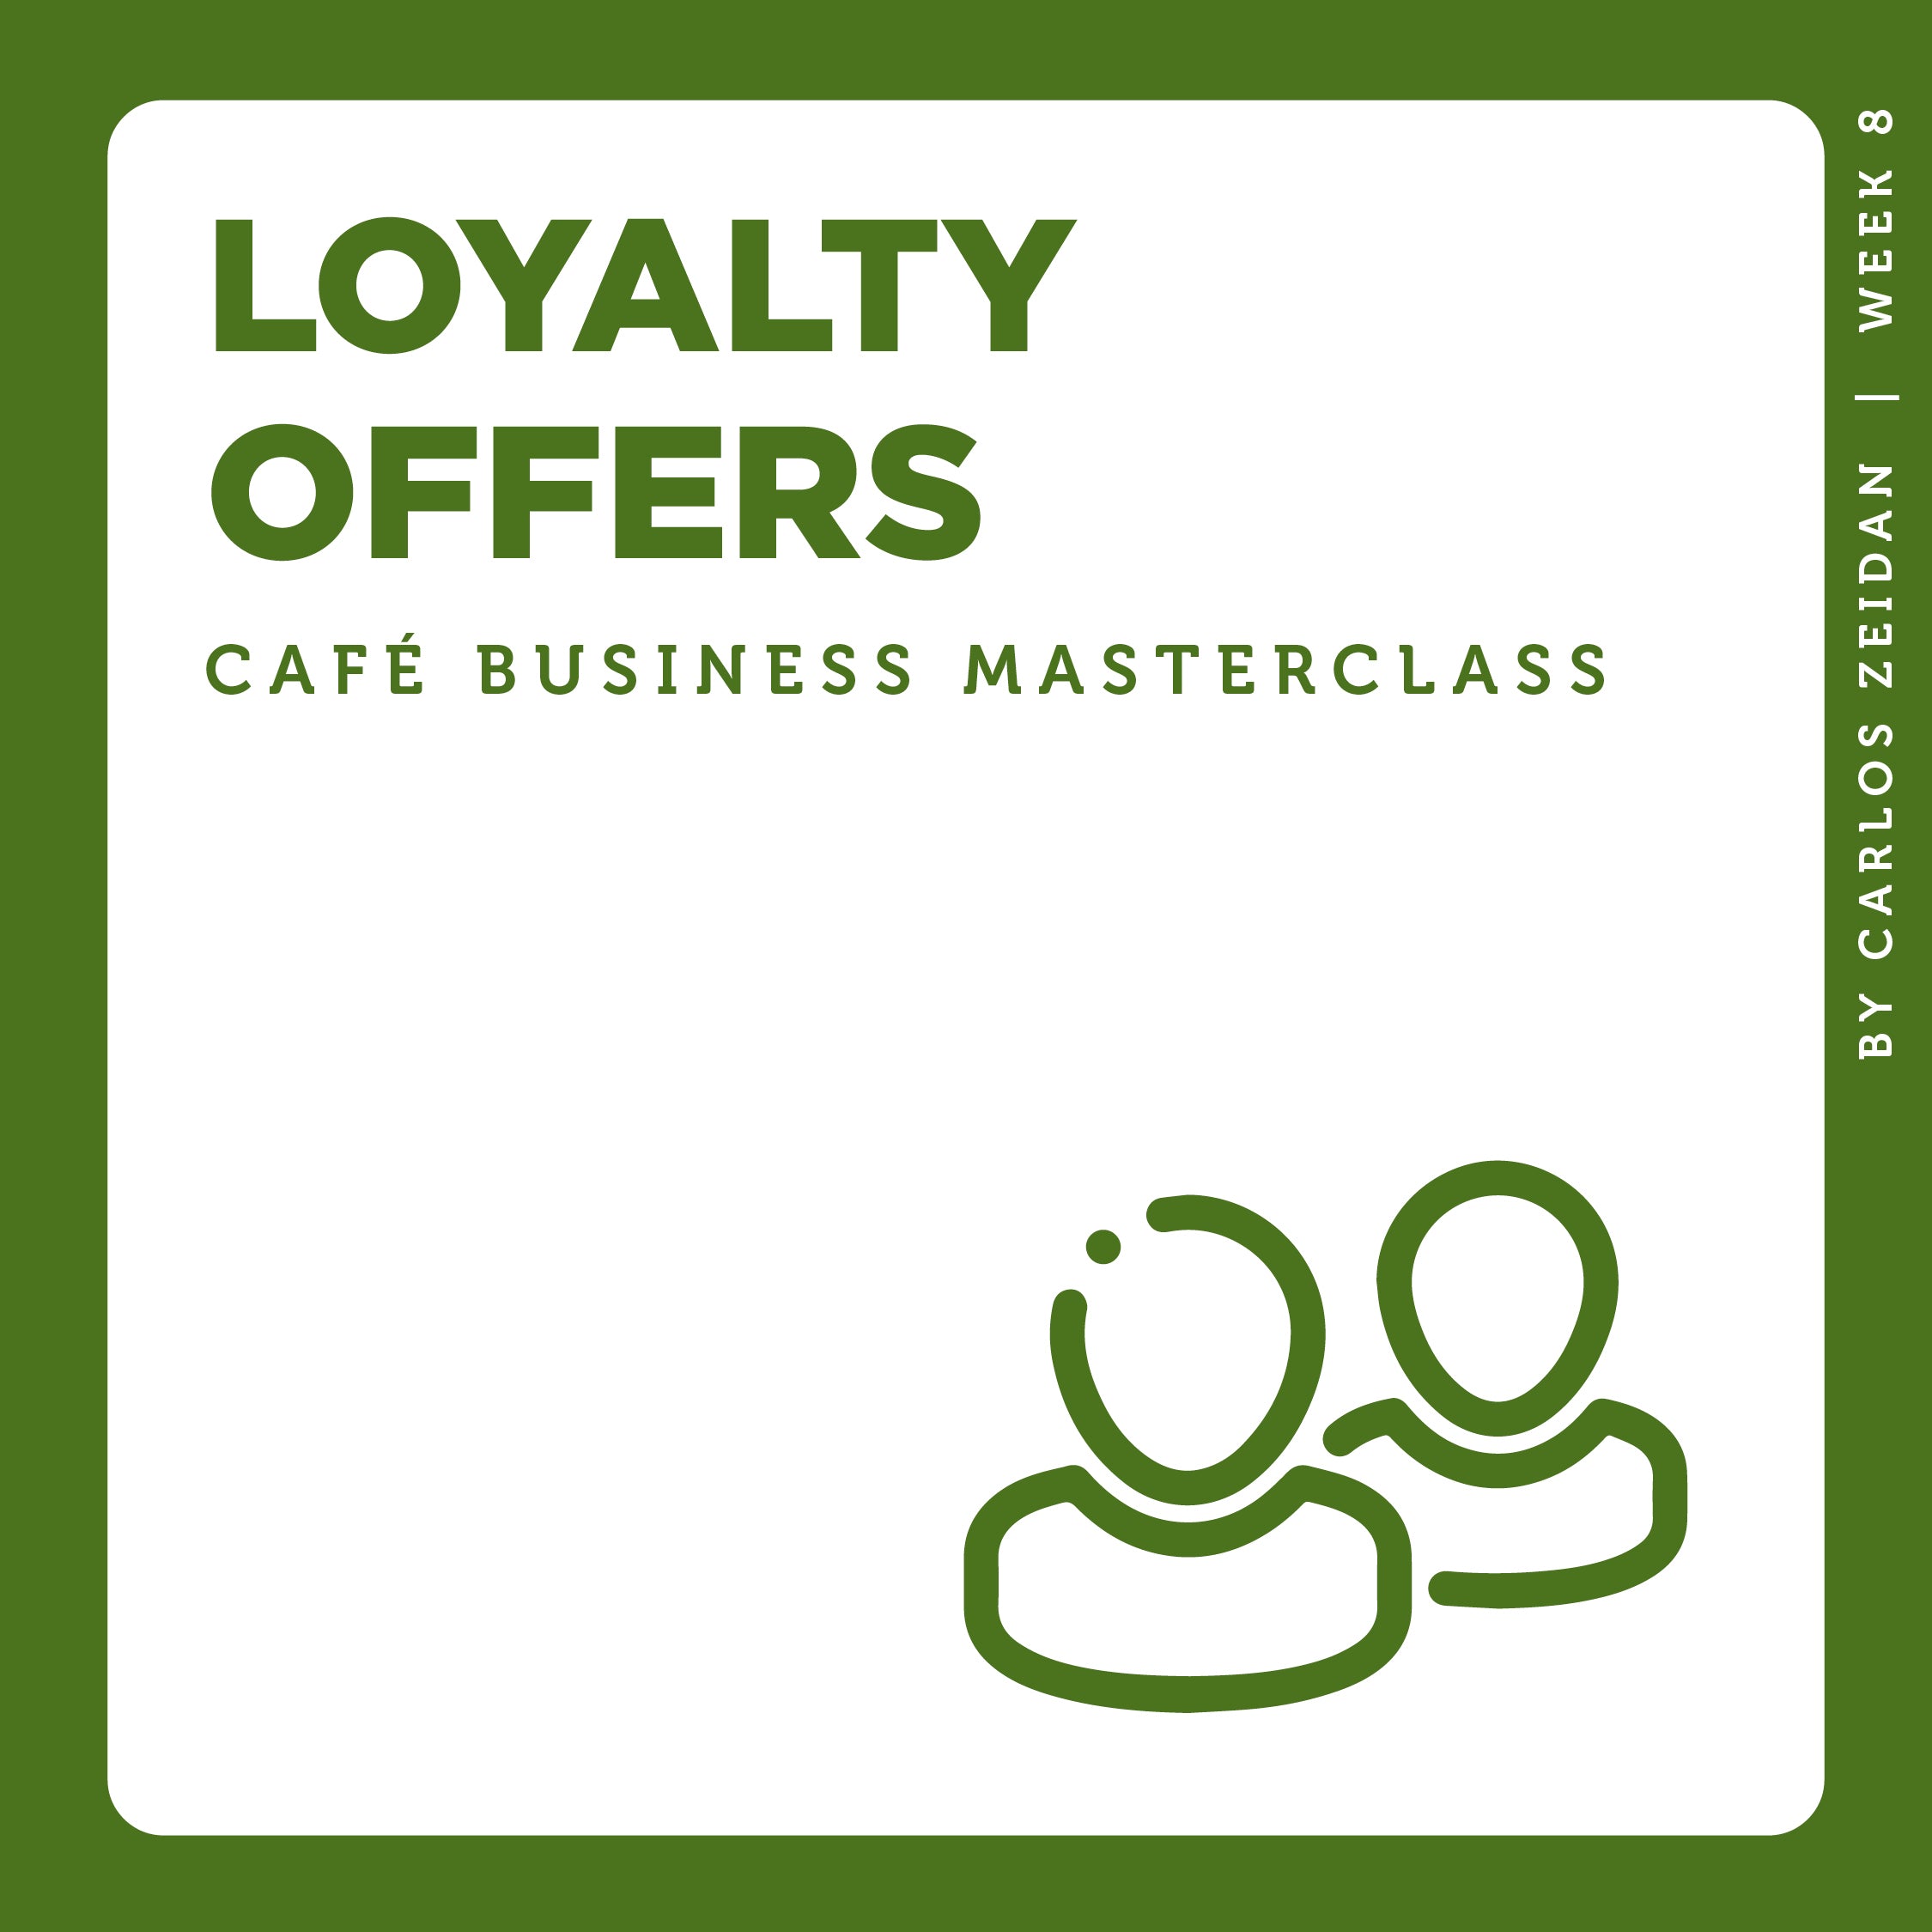 Café Business Masterclass: Loyalty Offers